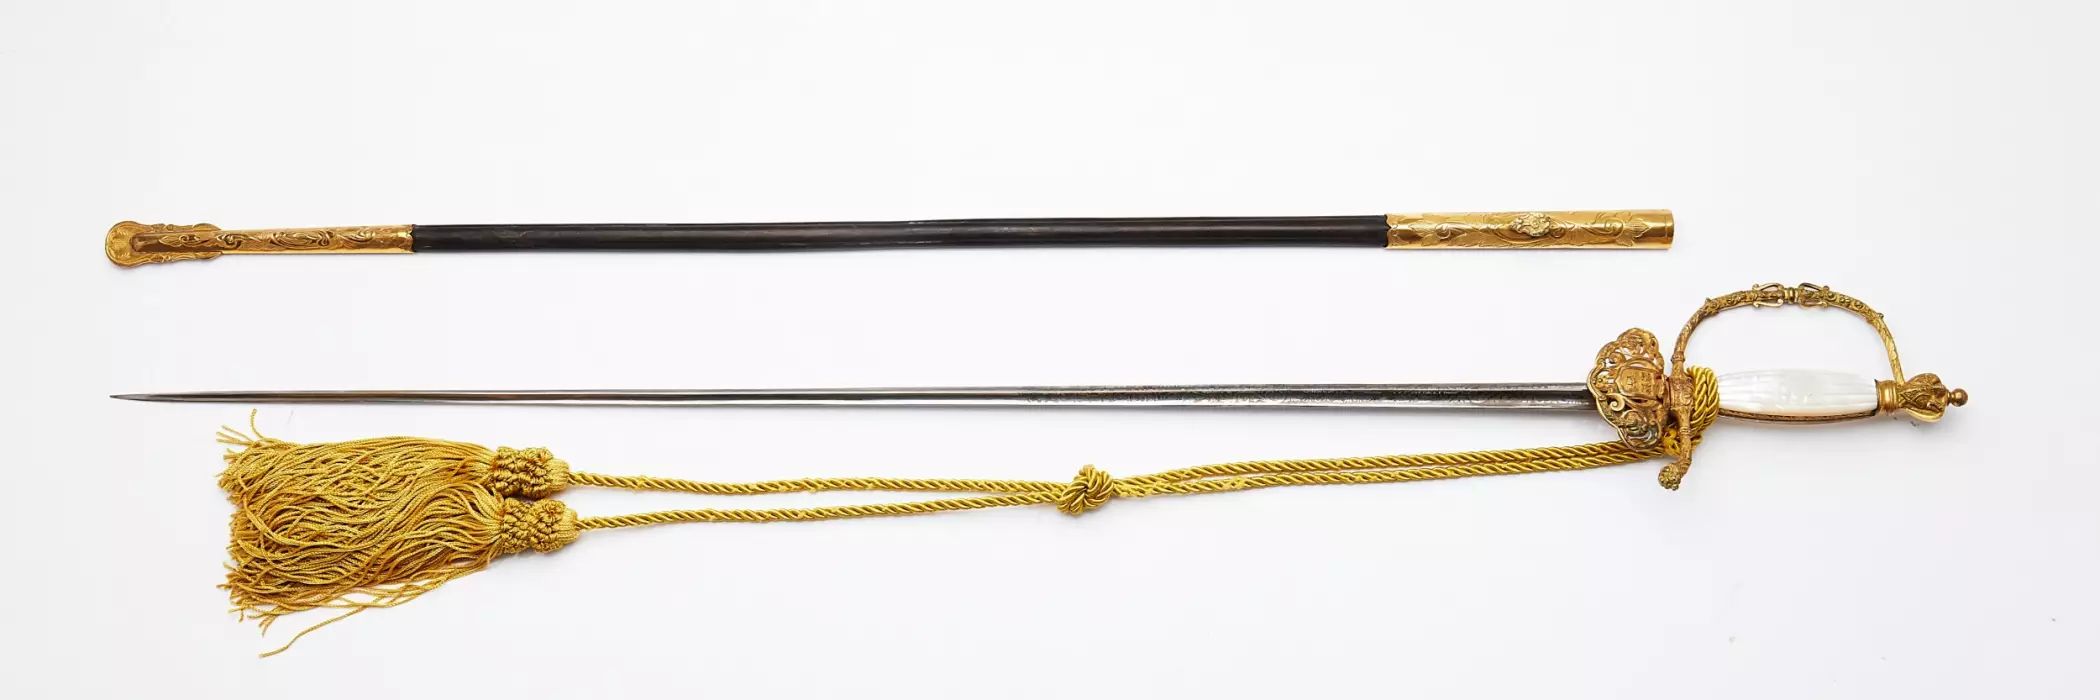 Swedish ceremonial sword of the late 19th century. 